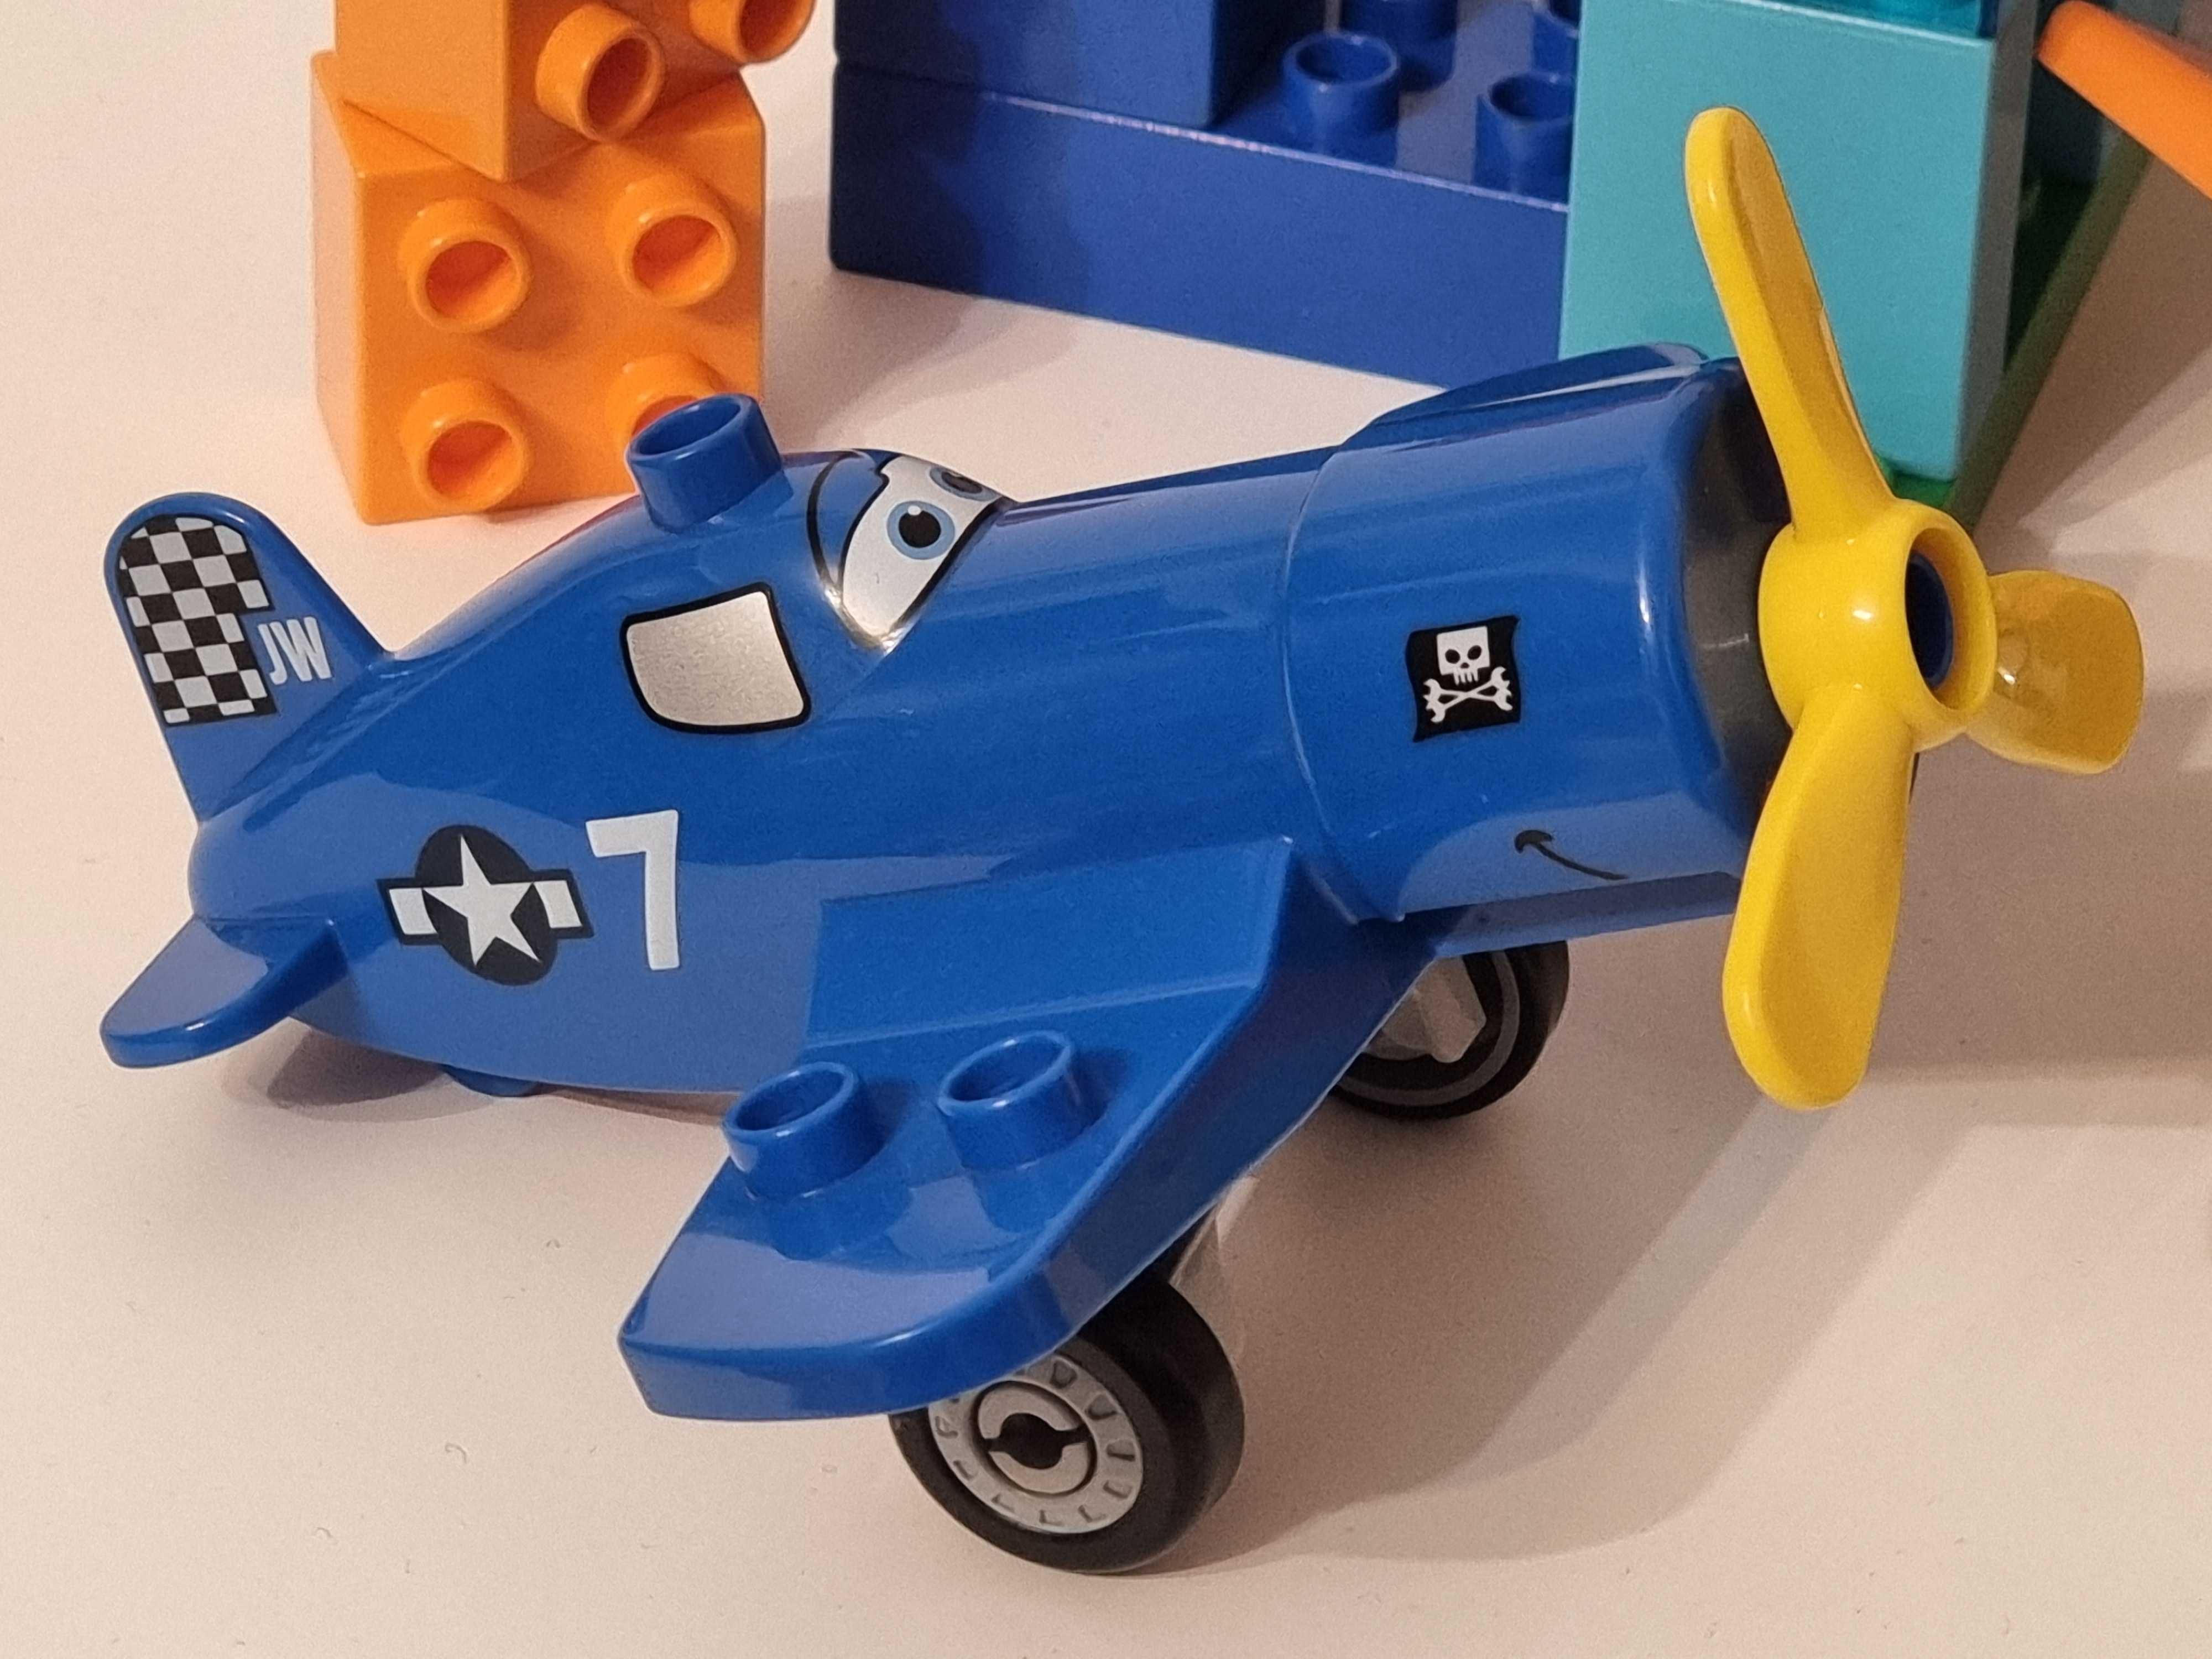 Scoala de pilotaj Lego Duplo, Avioane